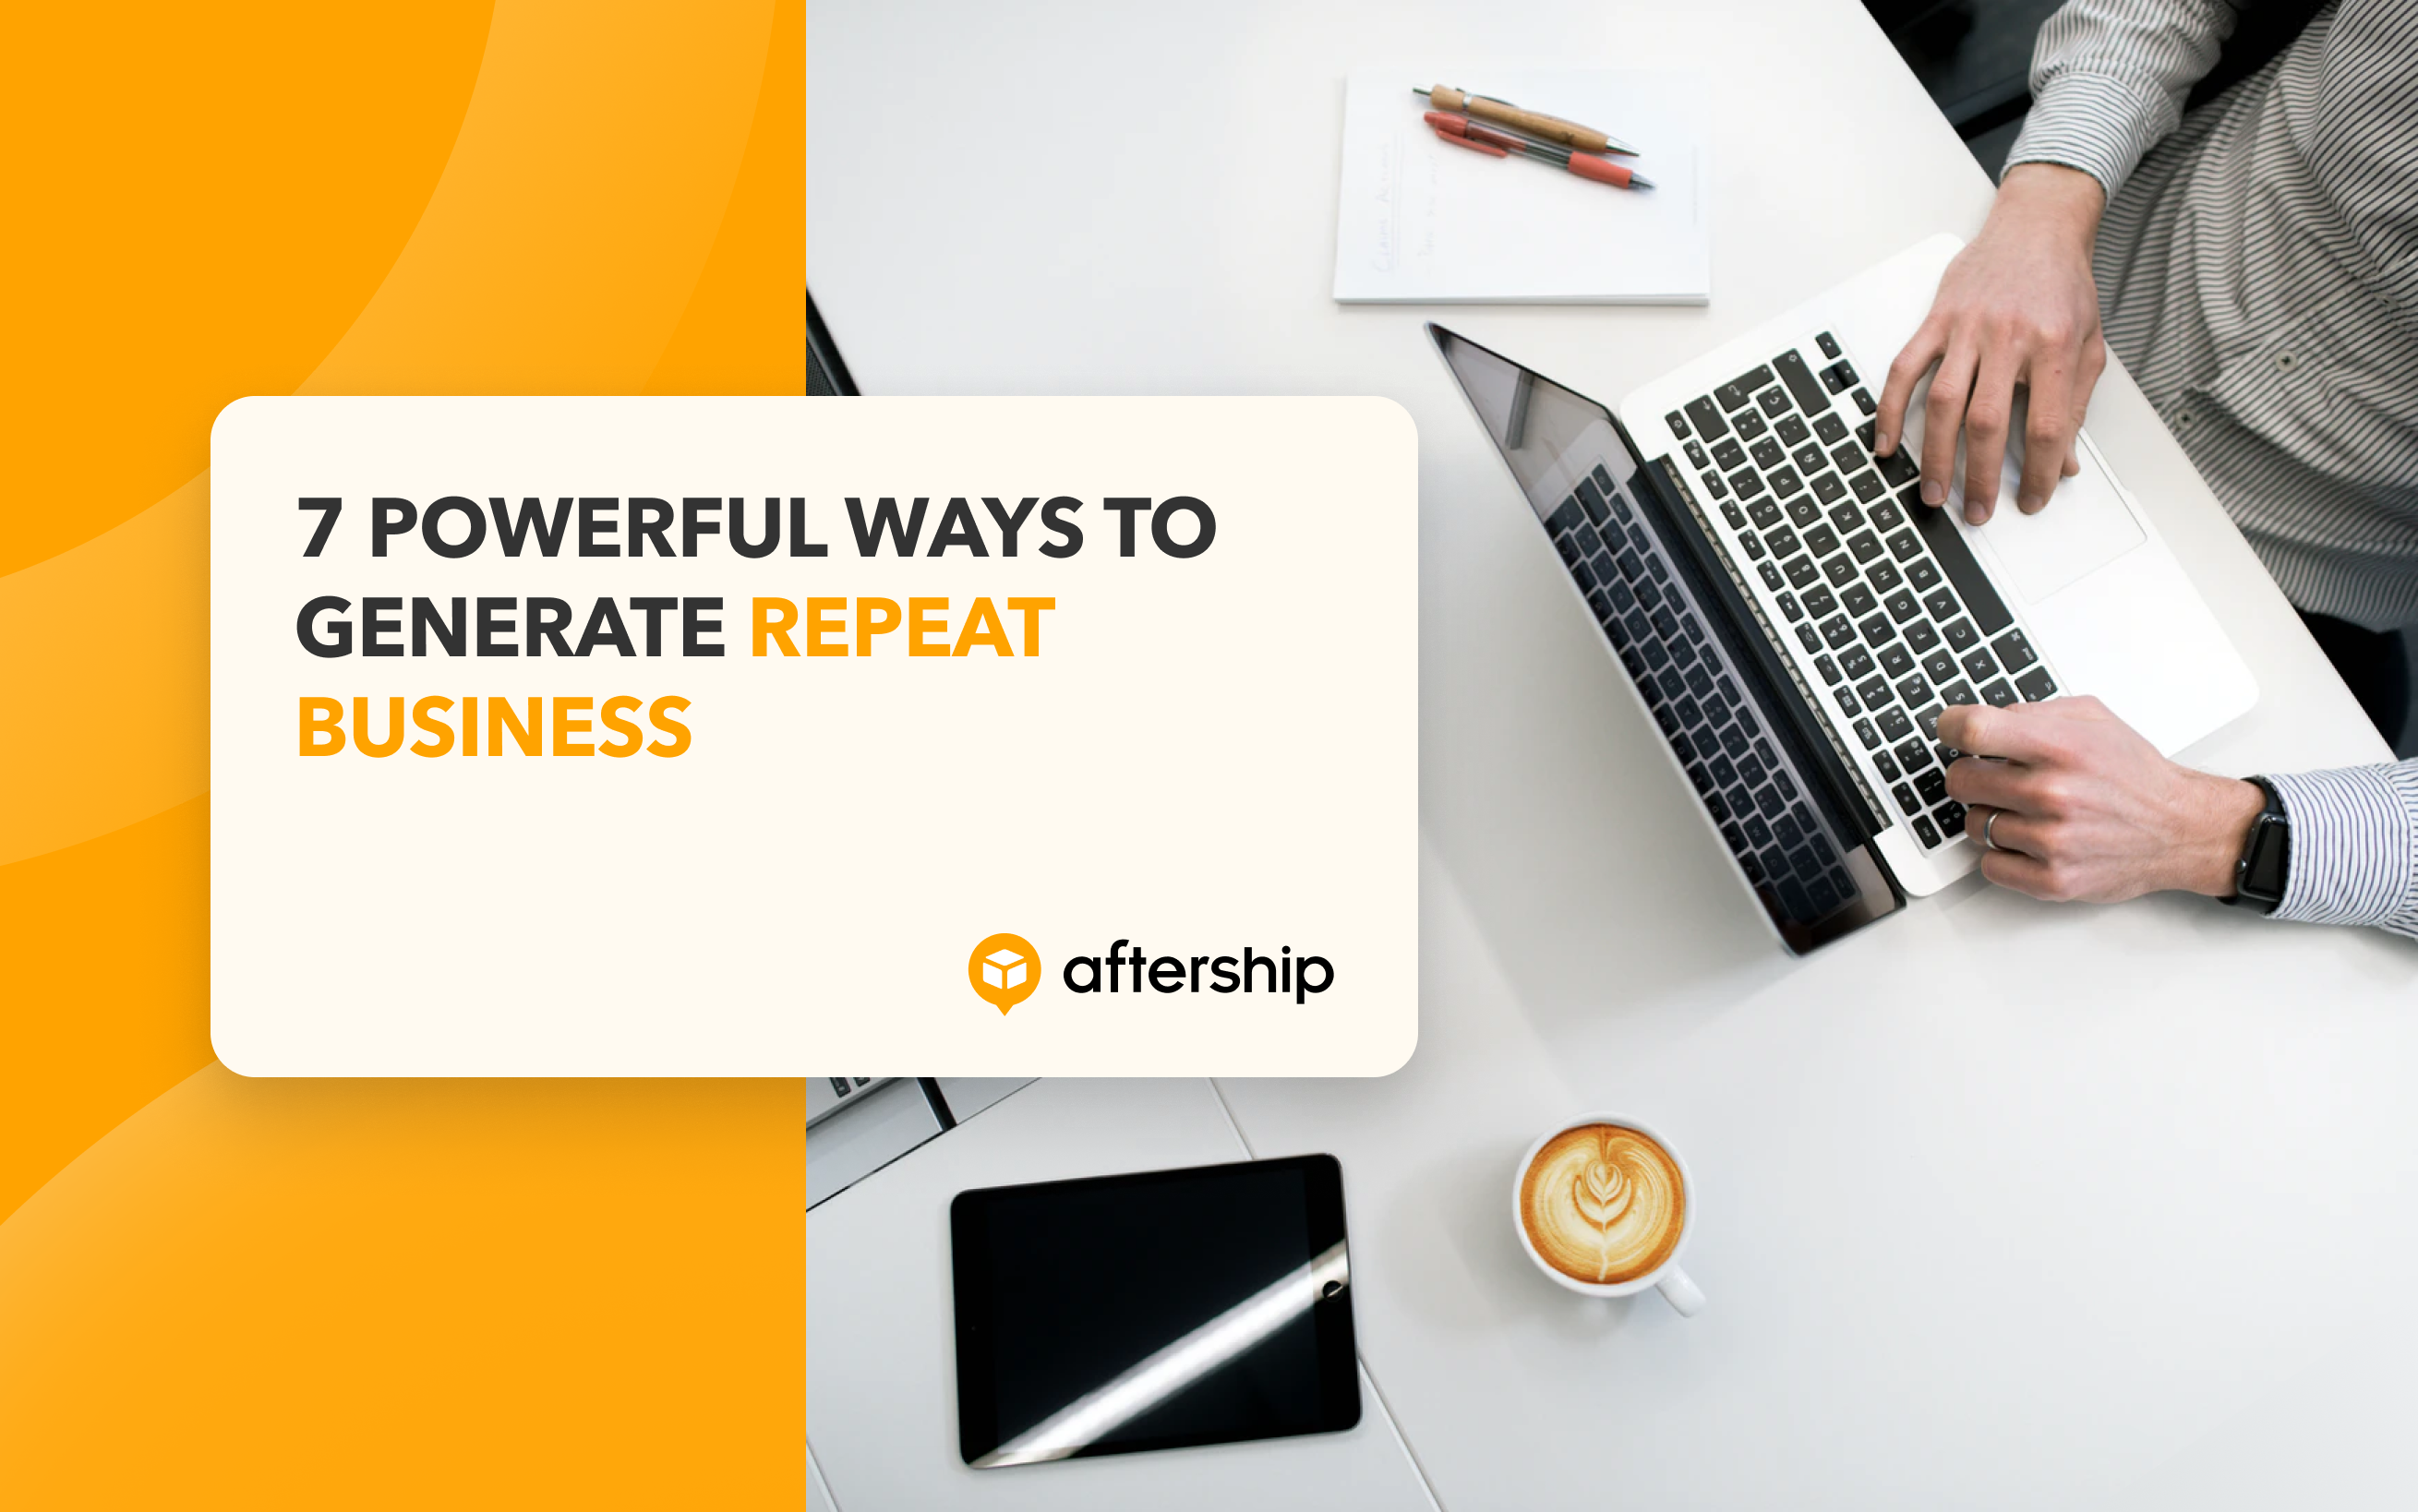 Customer retention 101: 7 powerful ways to generate repeat business